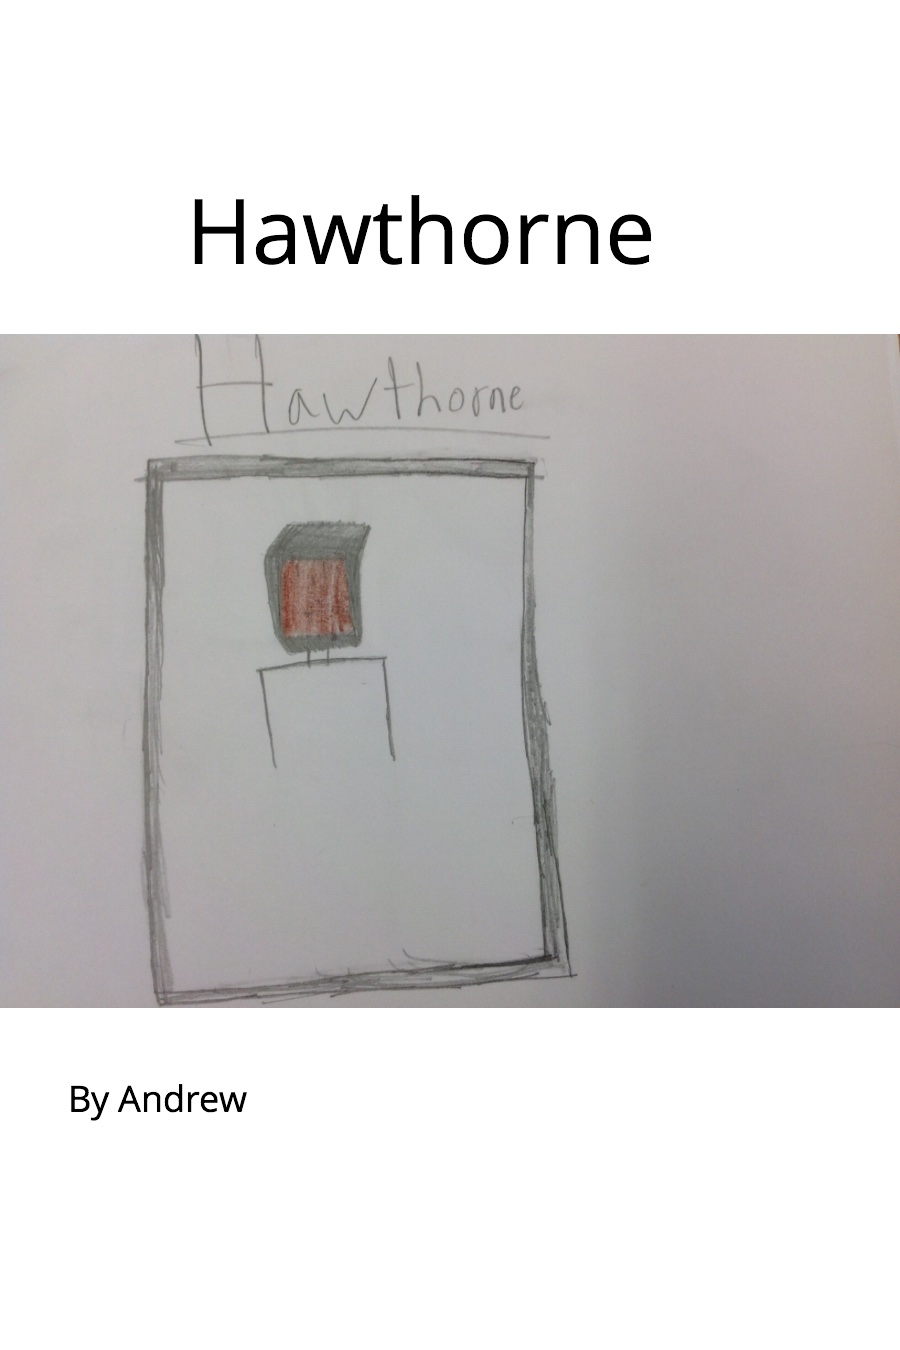 Hawthorne by Andrew C